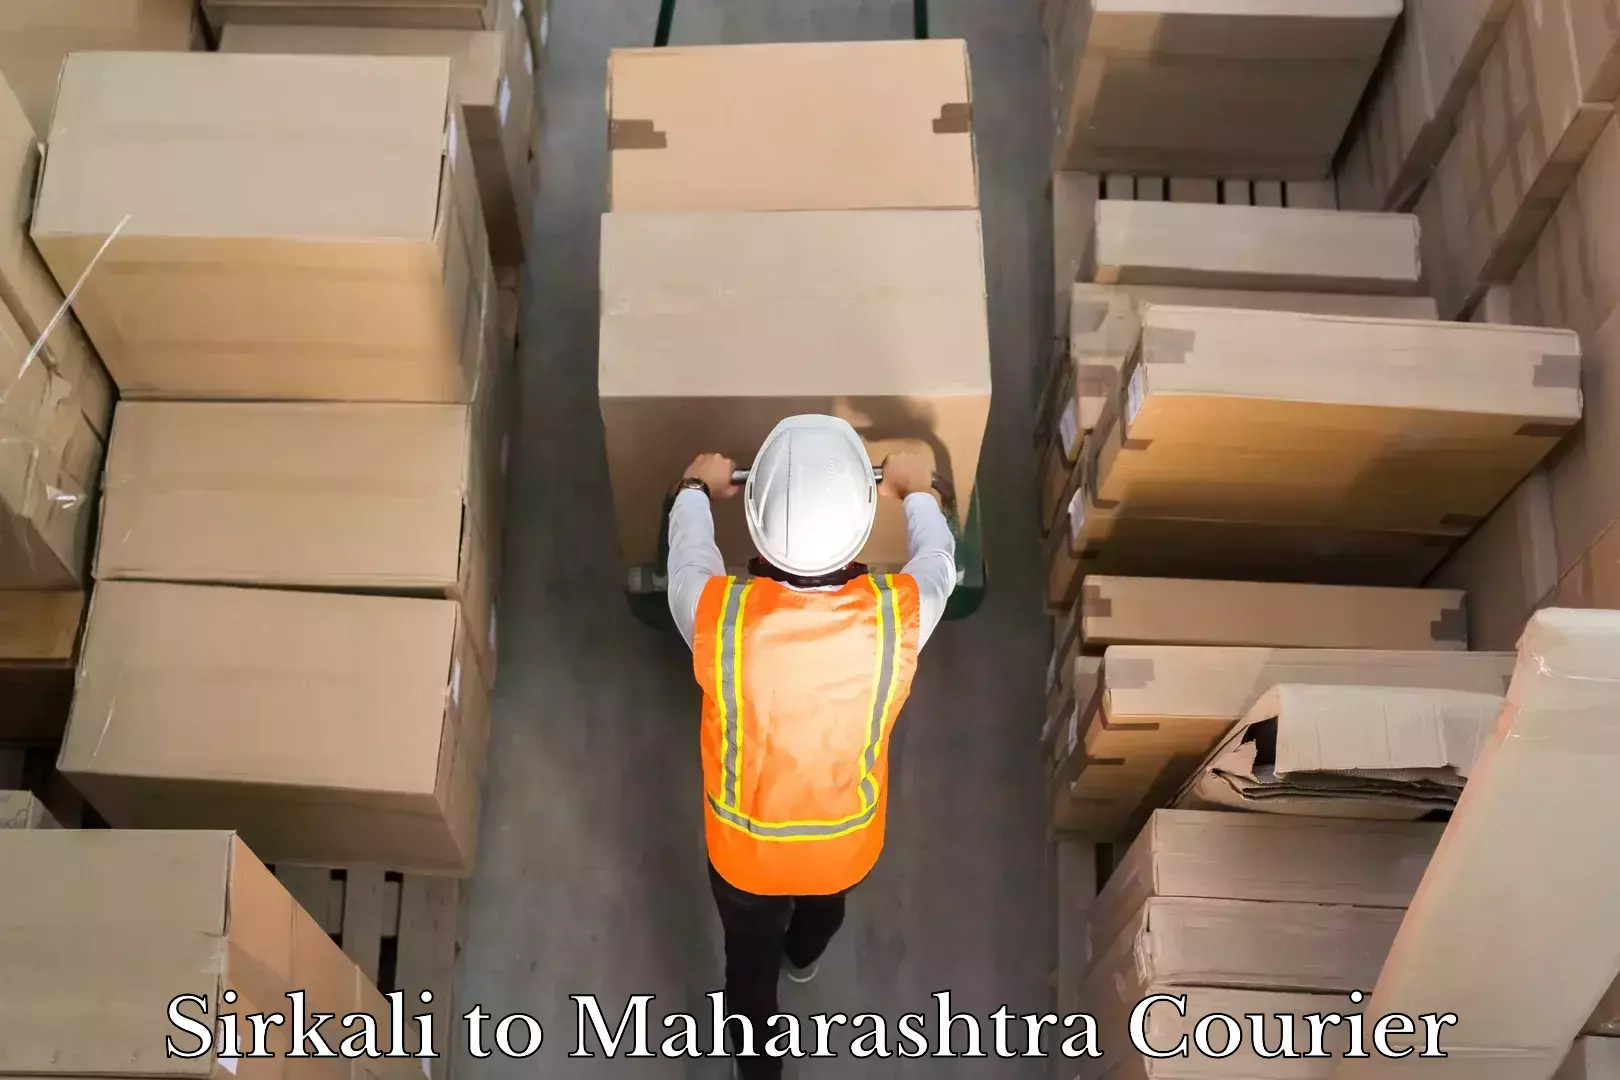 Courier service comparison in Sirkali to Maharashtra